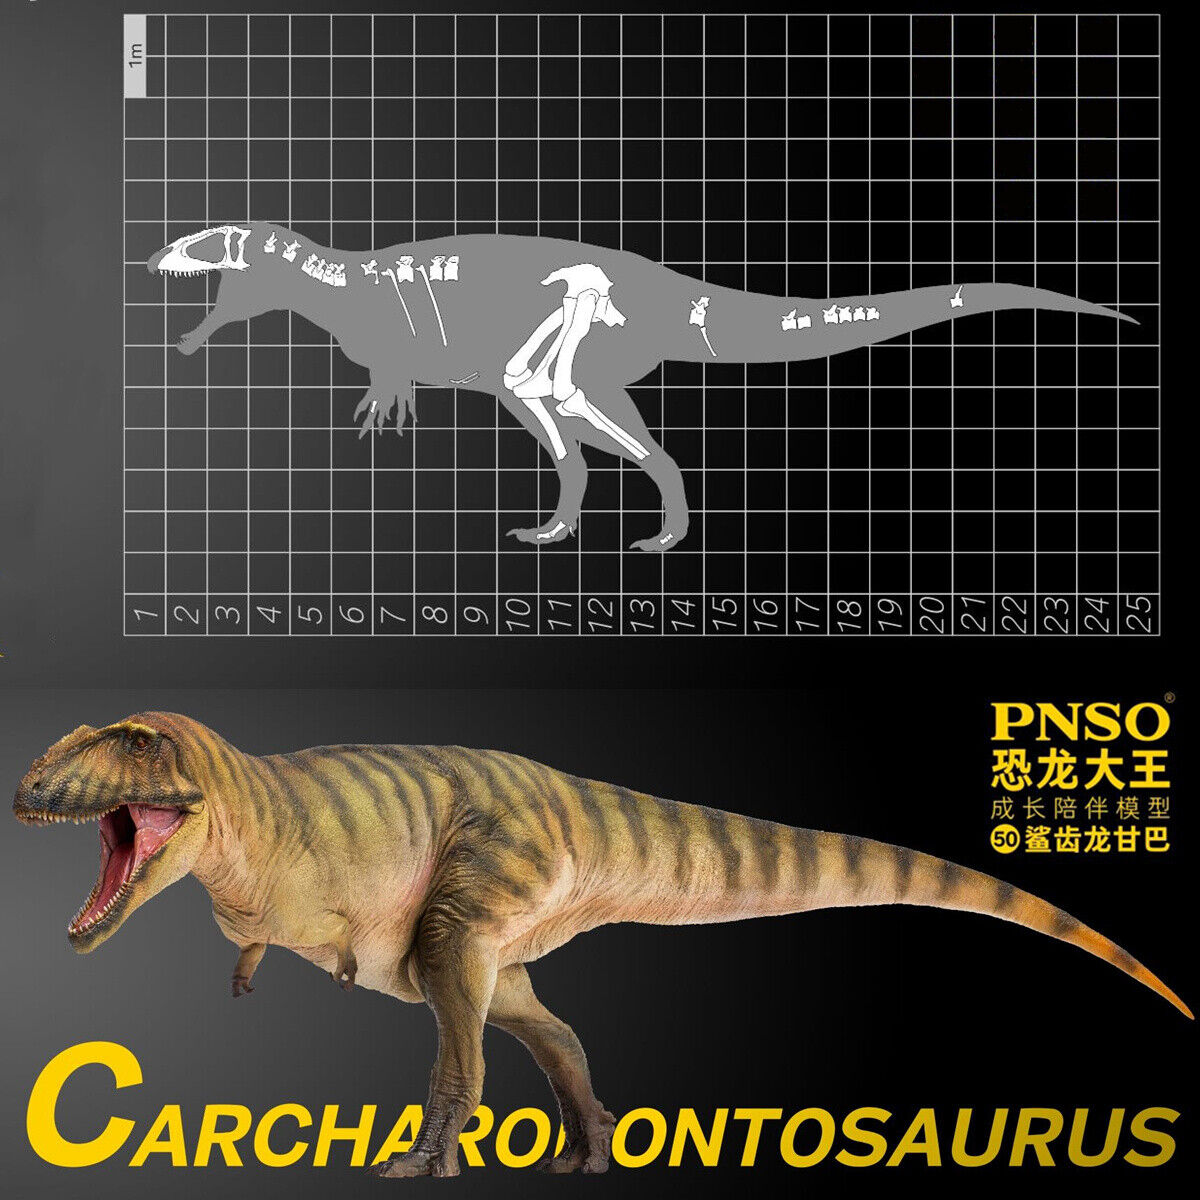 PNSO Carcharodontosaurus Gamba Carcharodontosauridae Dinosaur Animal Model Toy